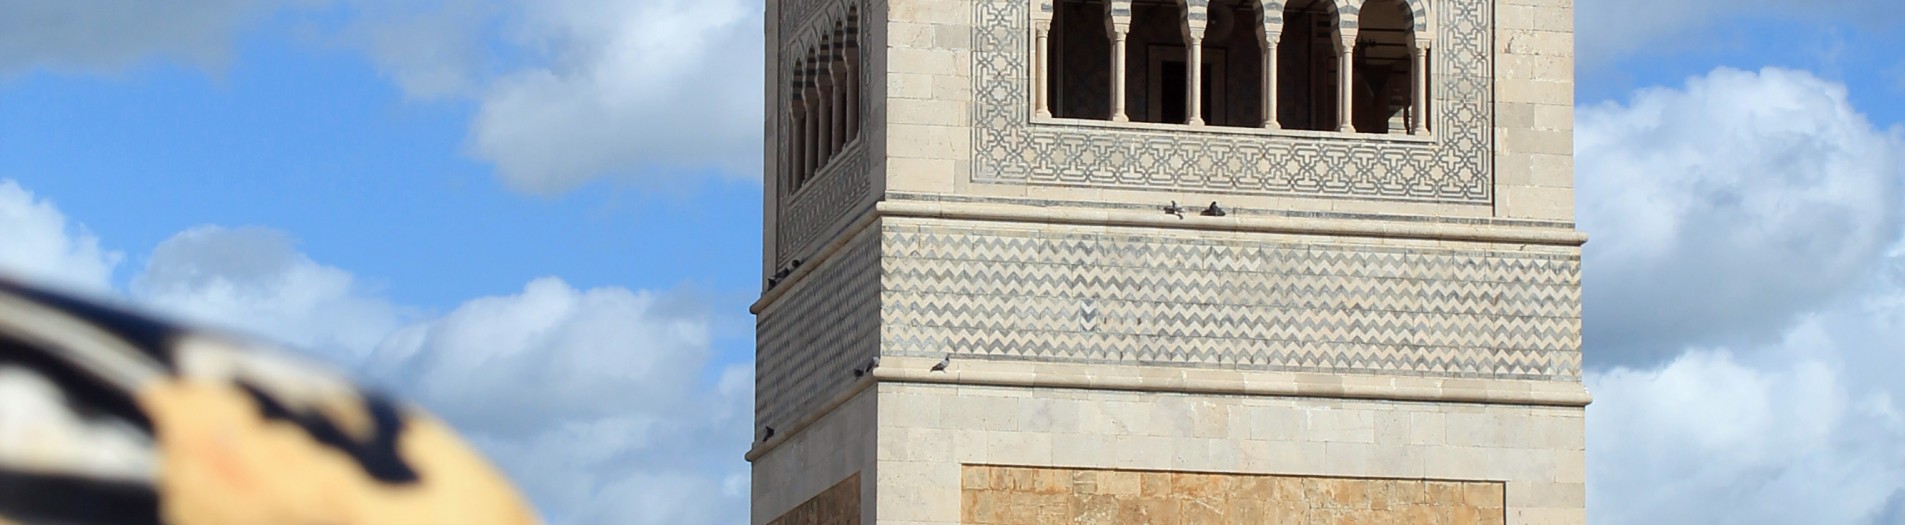 Mosquée Zitouna جامع الزيتونة